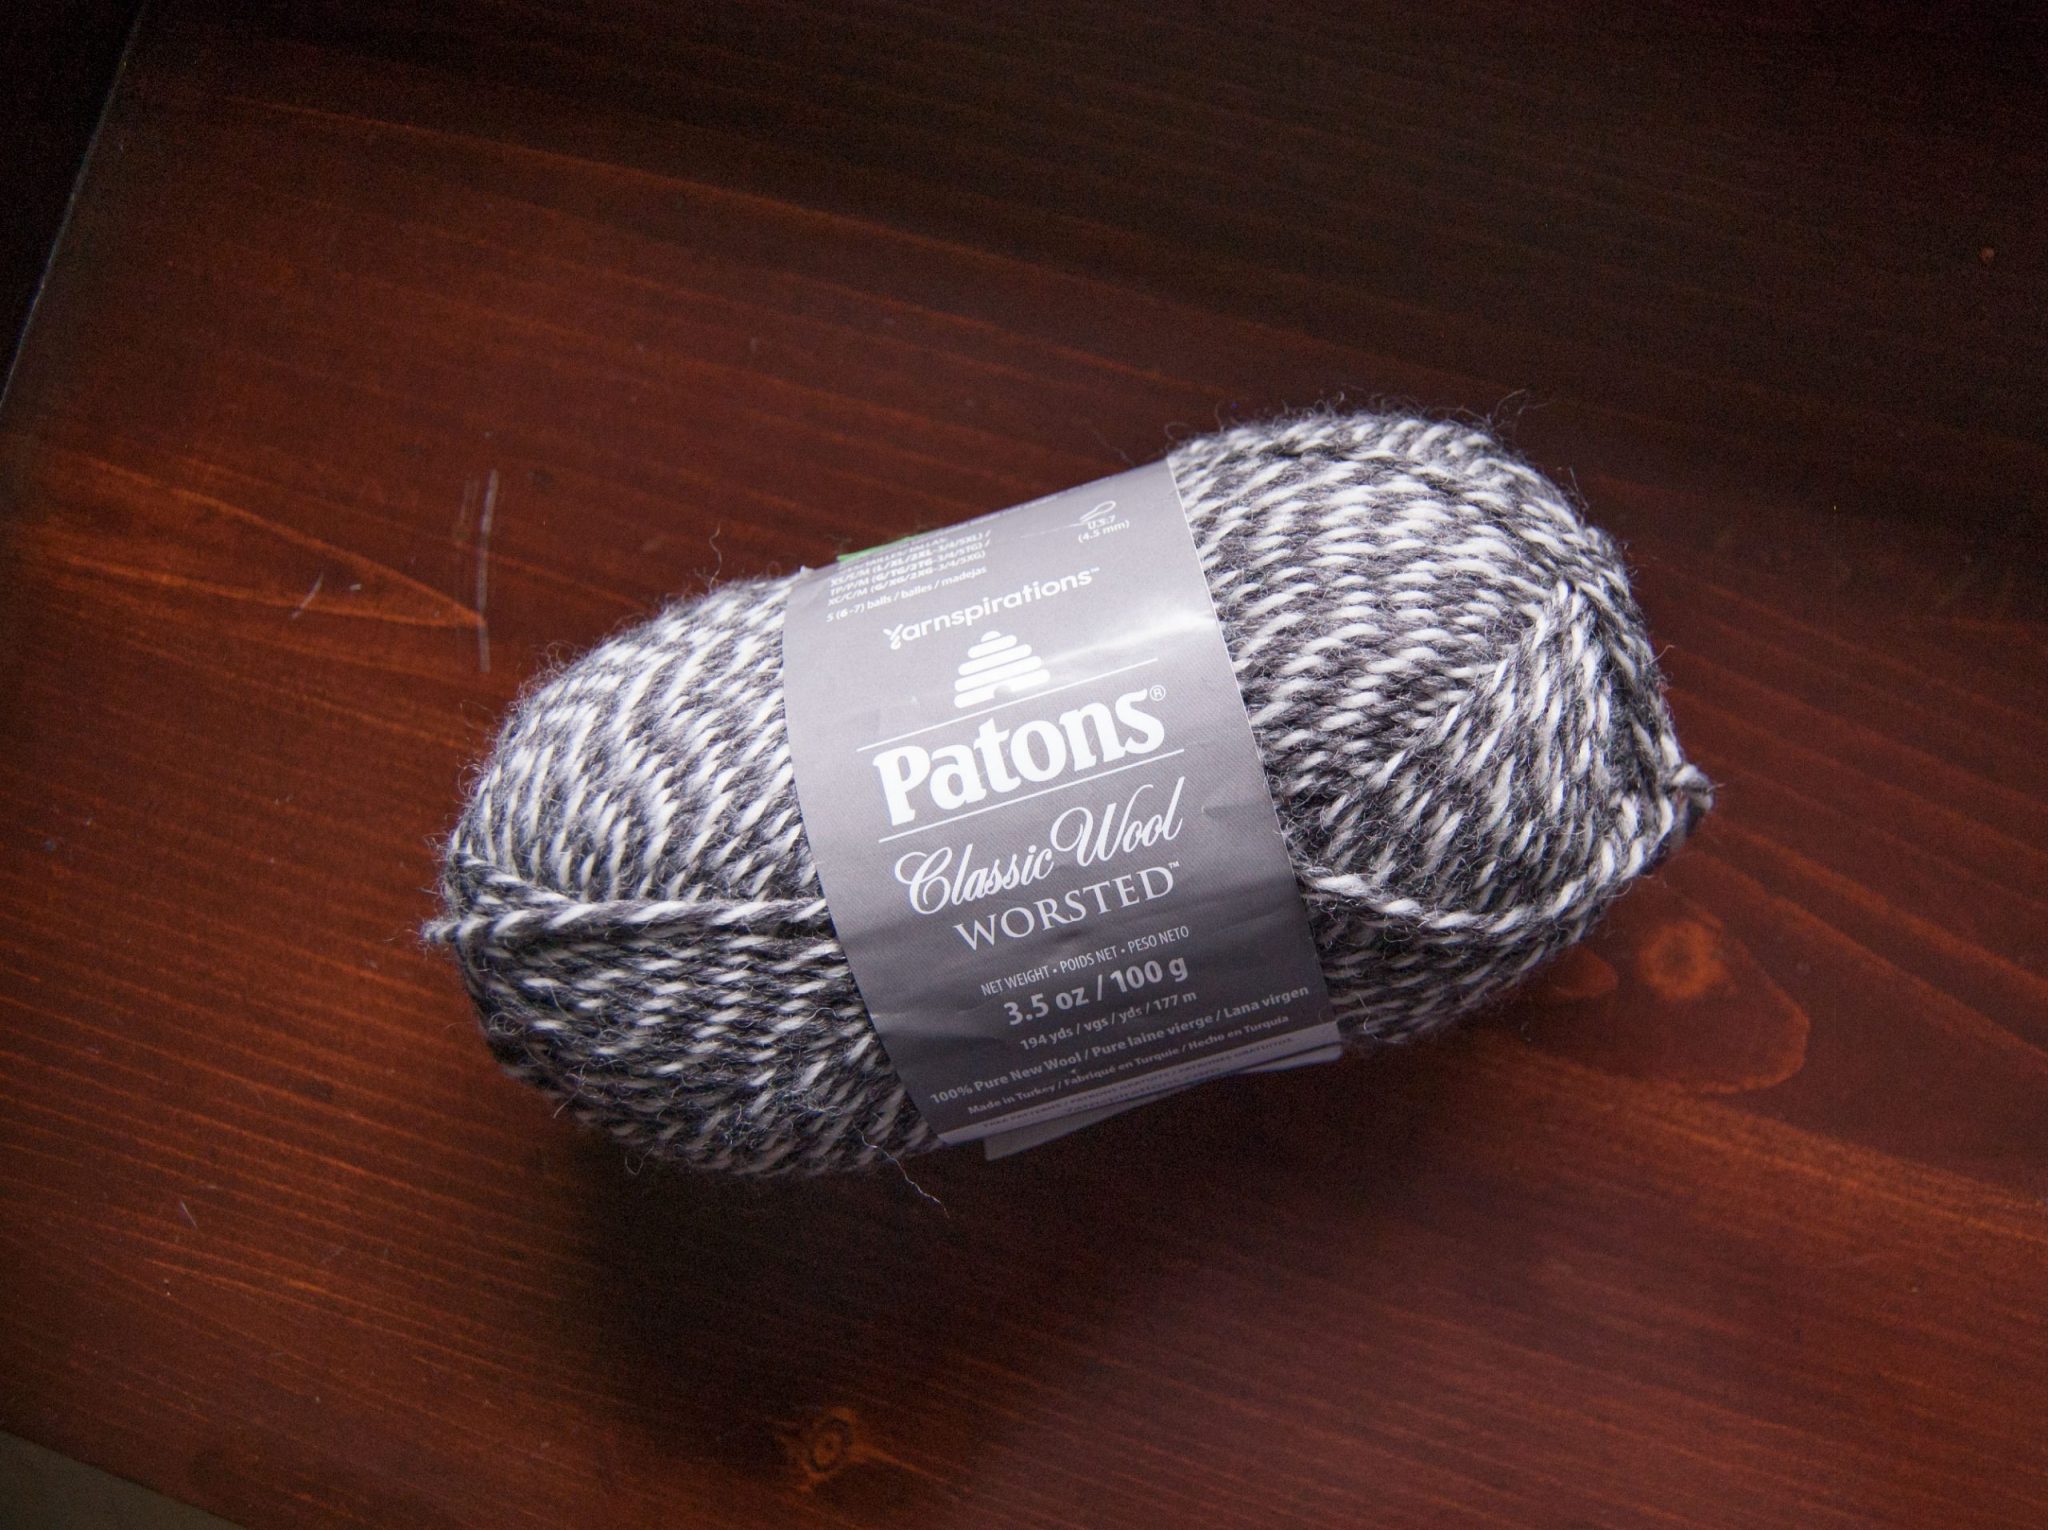 Patons Classic Wool Worsted Yarn - Budget Yarn Reviews